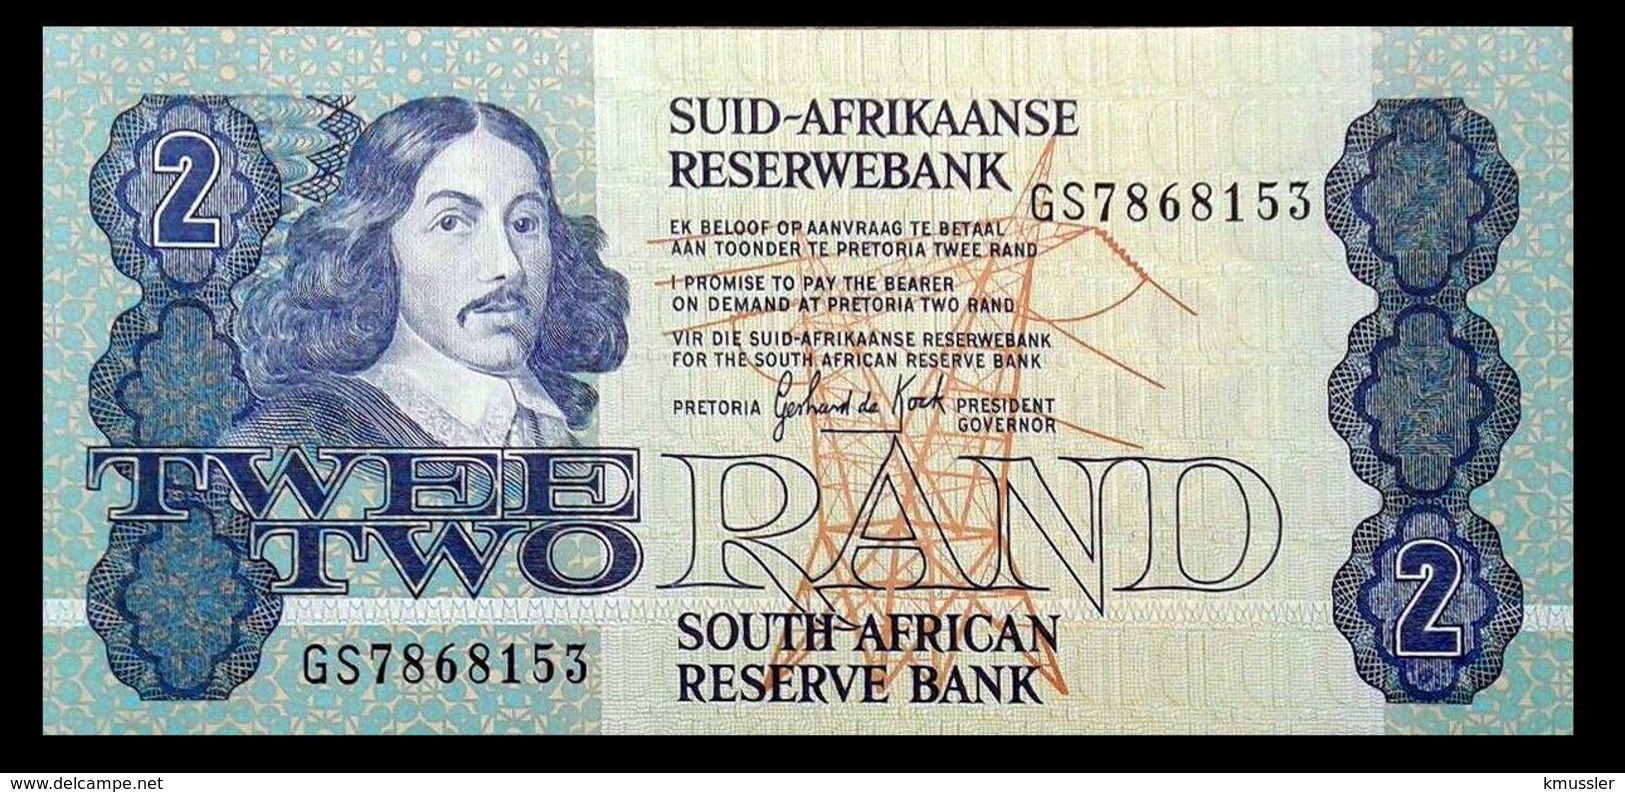 # # # Banknote Südafrika (South Africa) 2 Rand UNC # # # - Afrique Du Sud